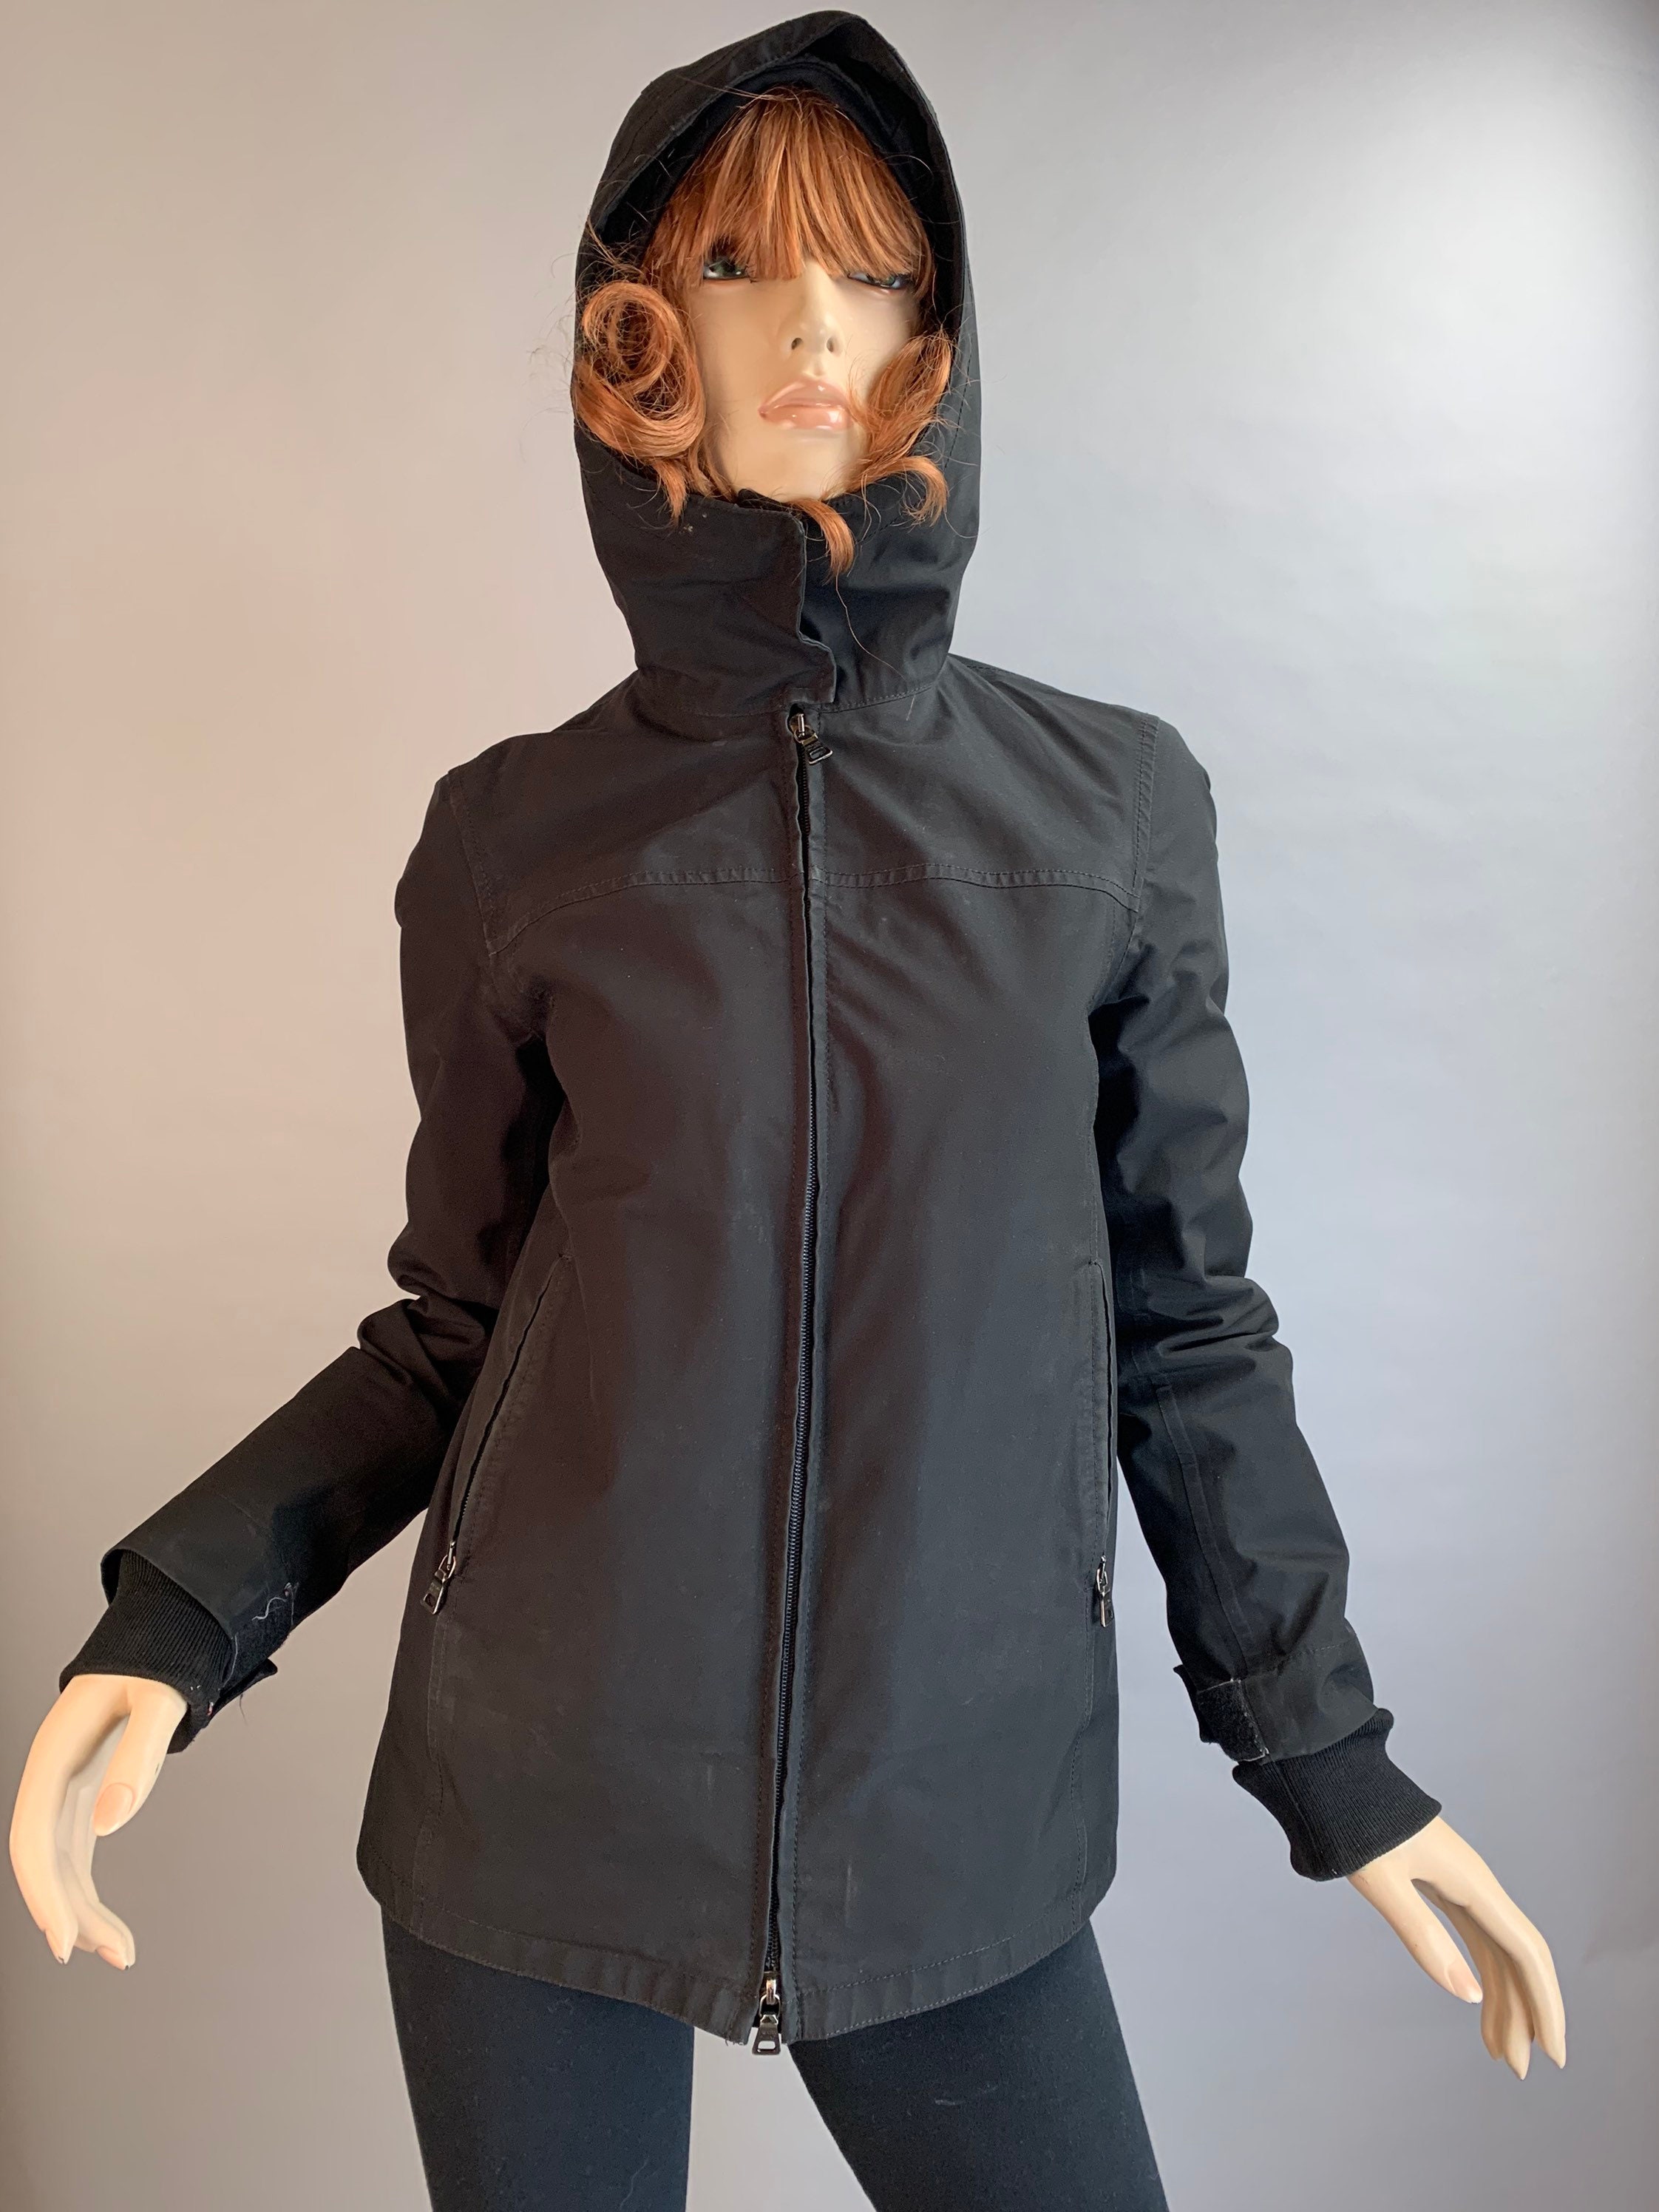 Vintage Prada Ski Jacket// Zip Out Liner// Prada Winter Coat - Etsy